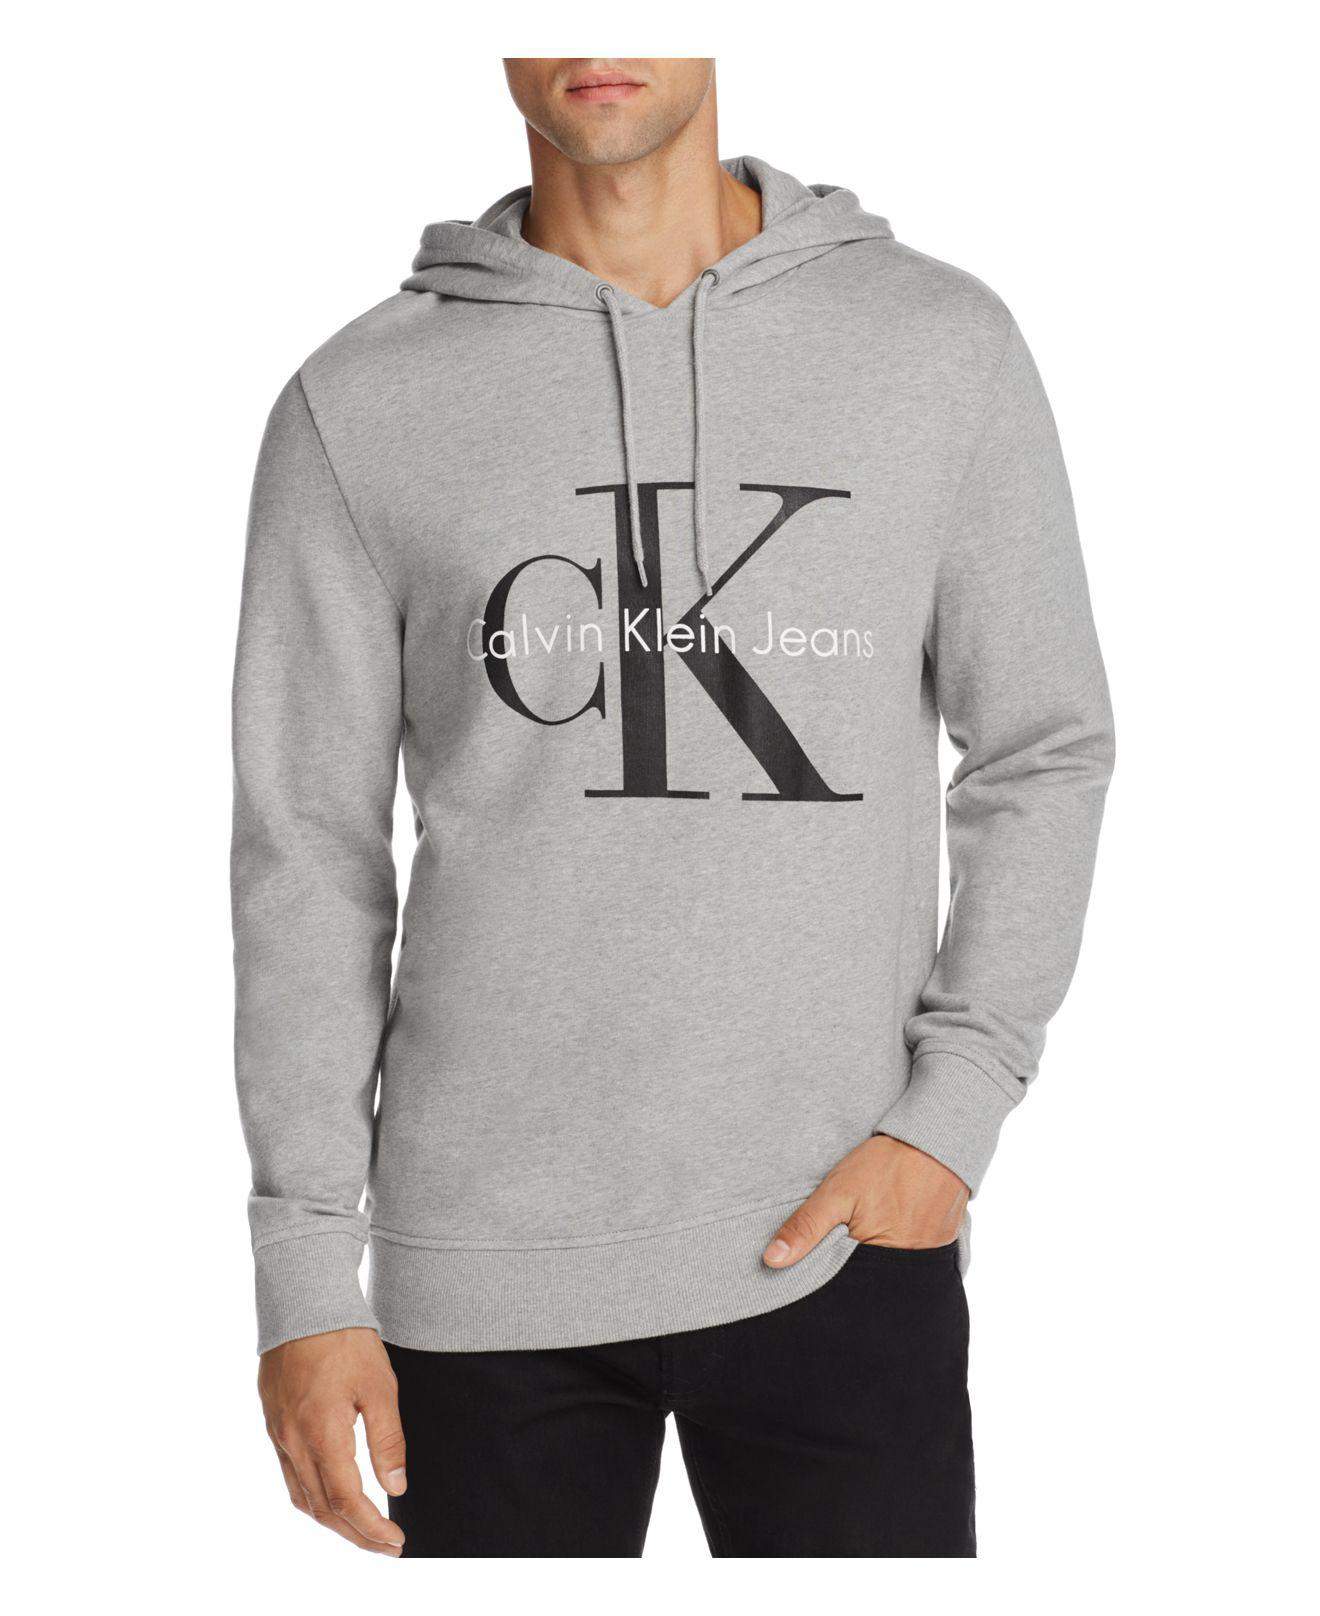 Calvin Klein Denim Jeans Core Logo Hooded Sweatshirt in Gray Heather ...